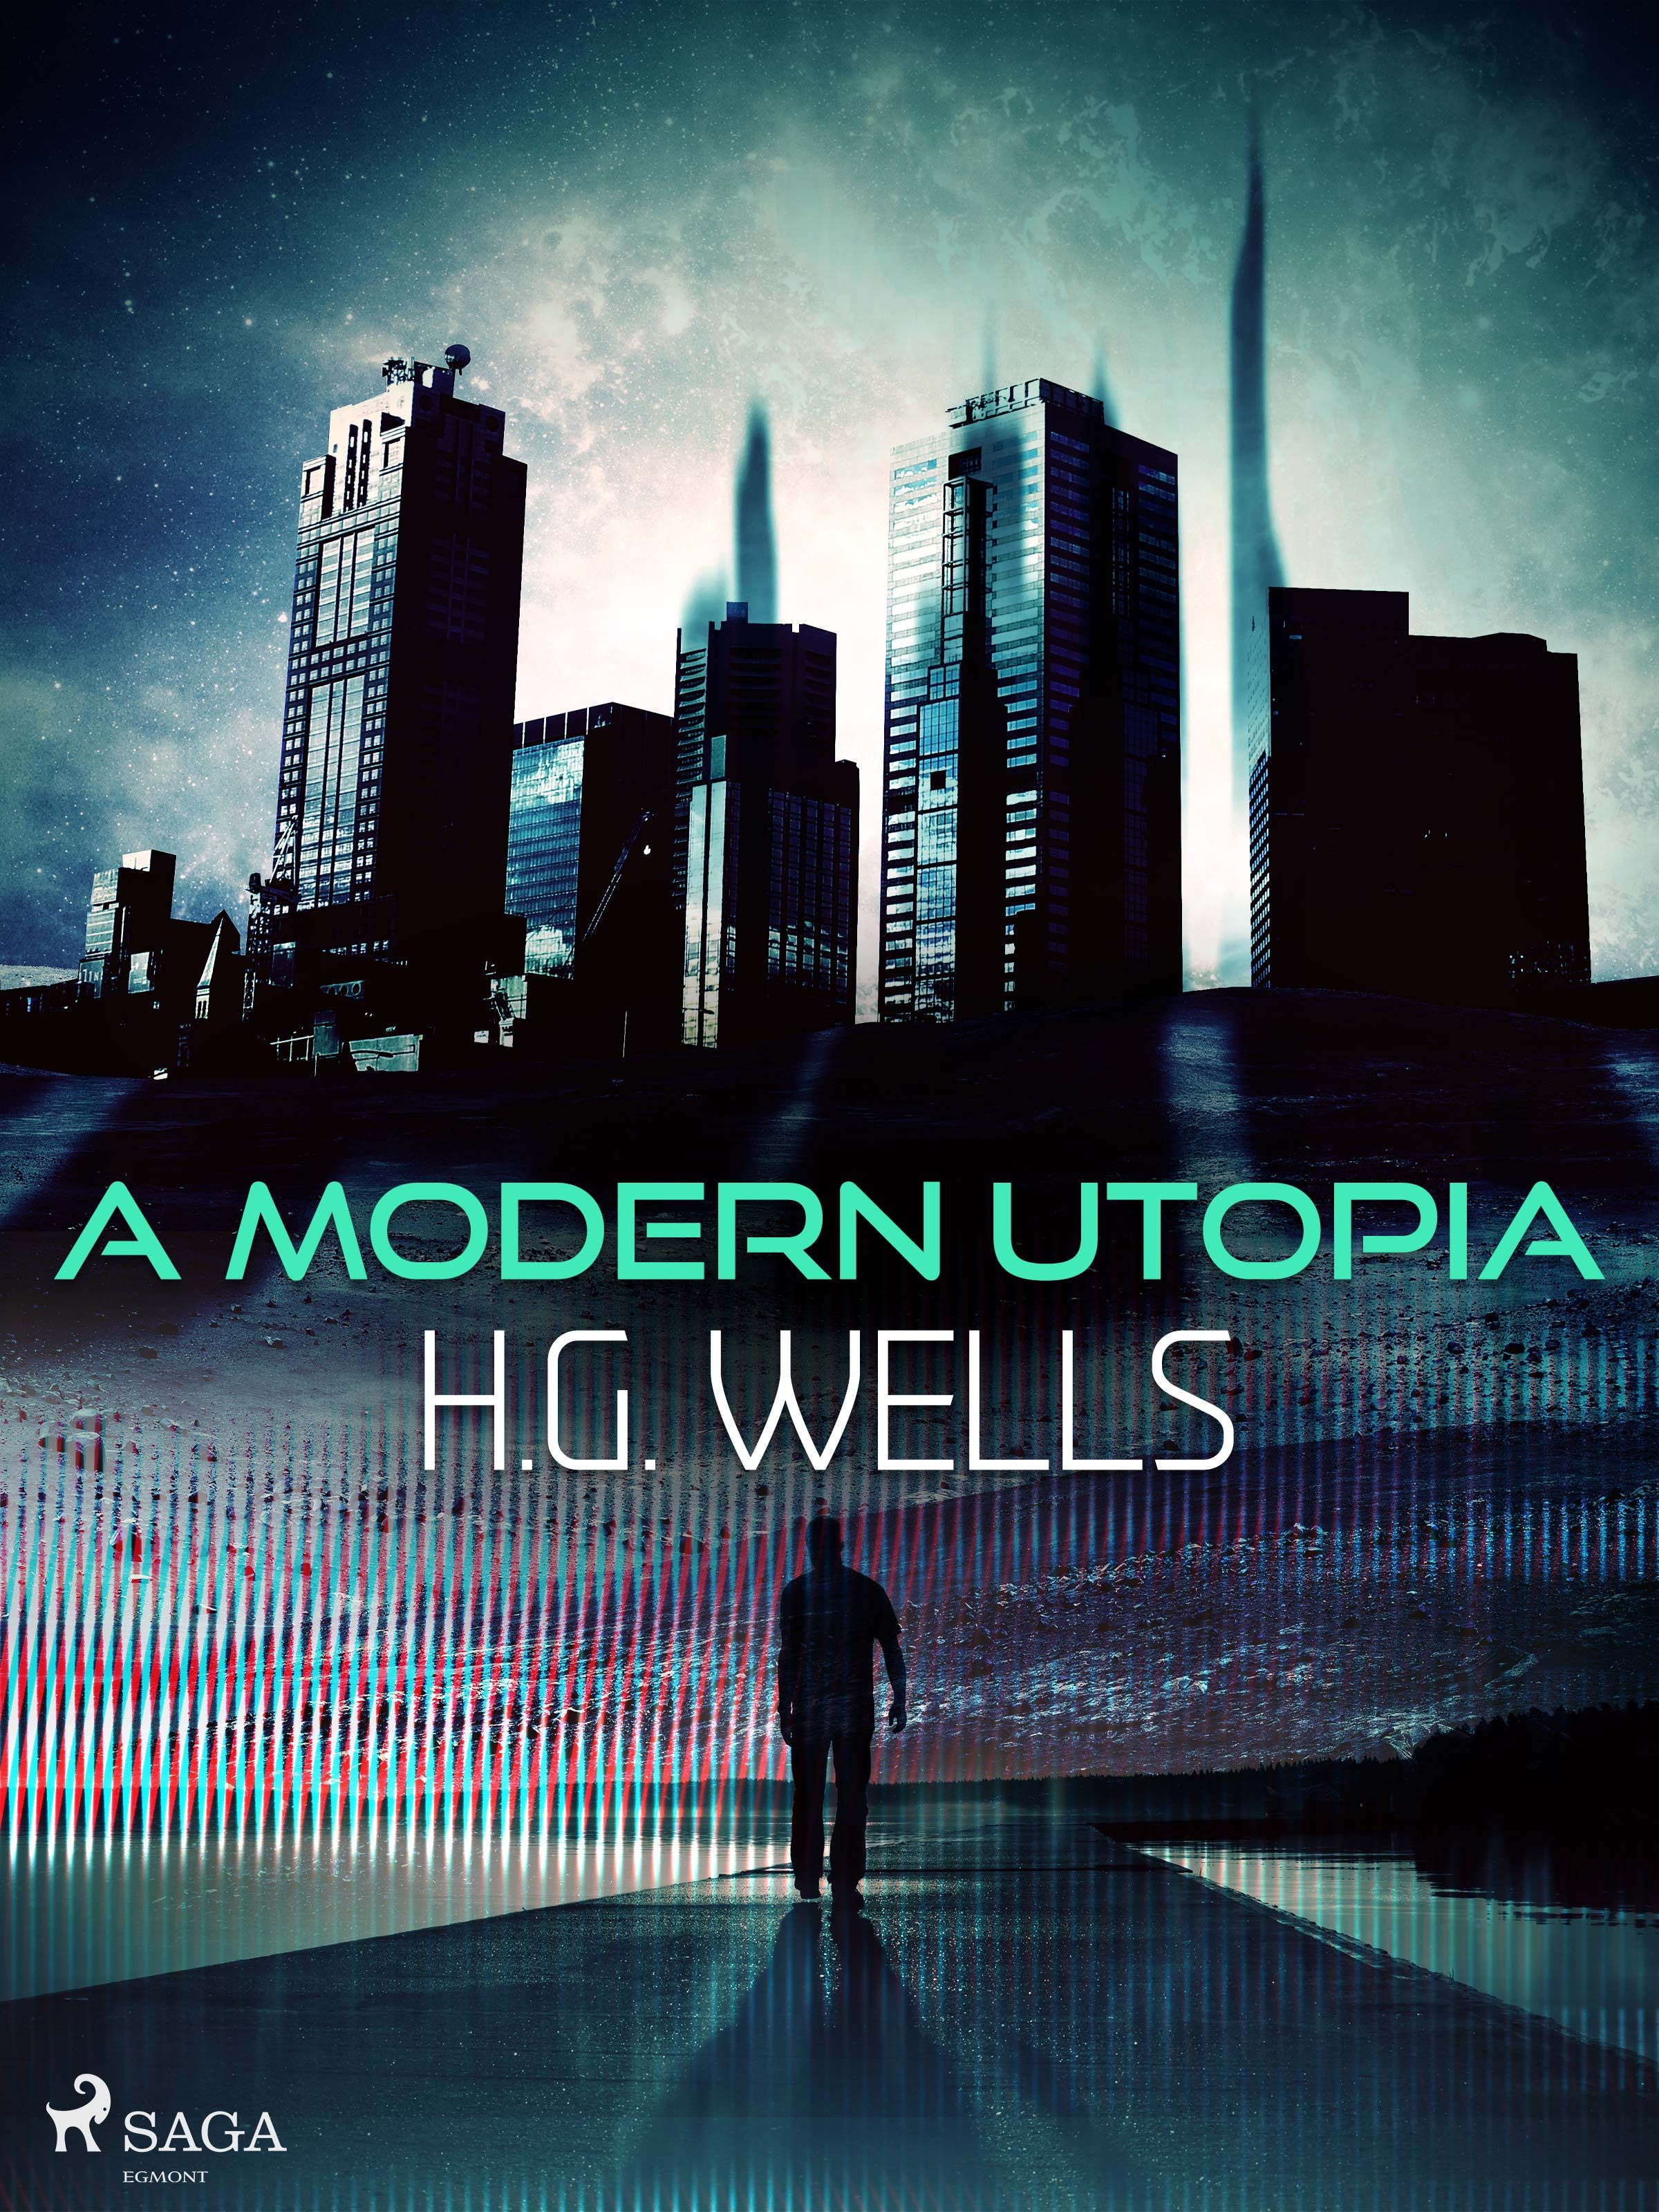 A Modern Utopia, e-bog af H. G. Wells